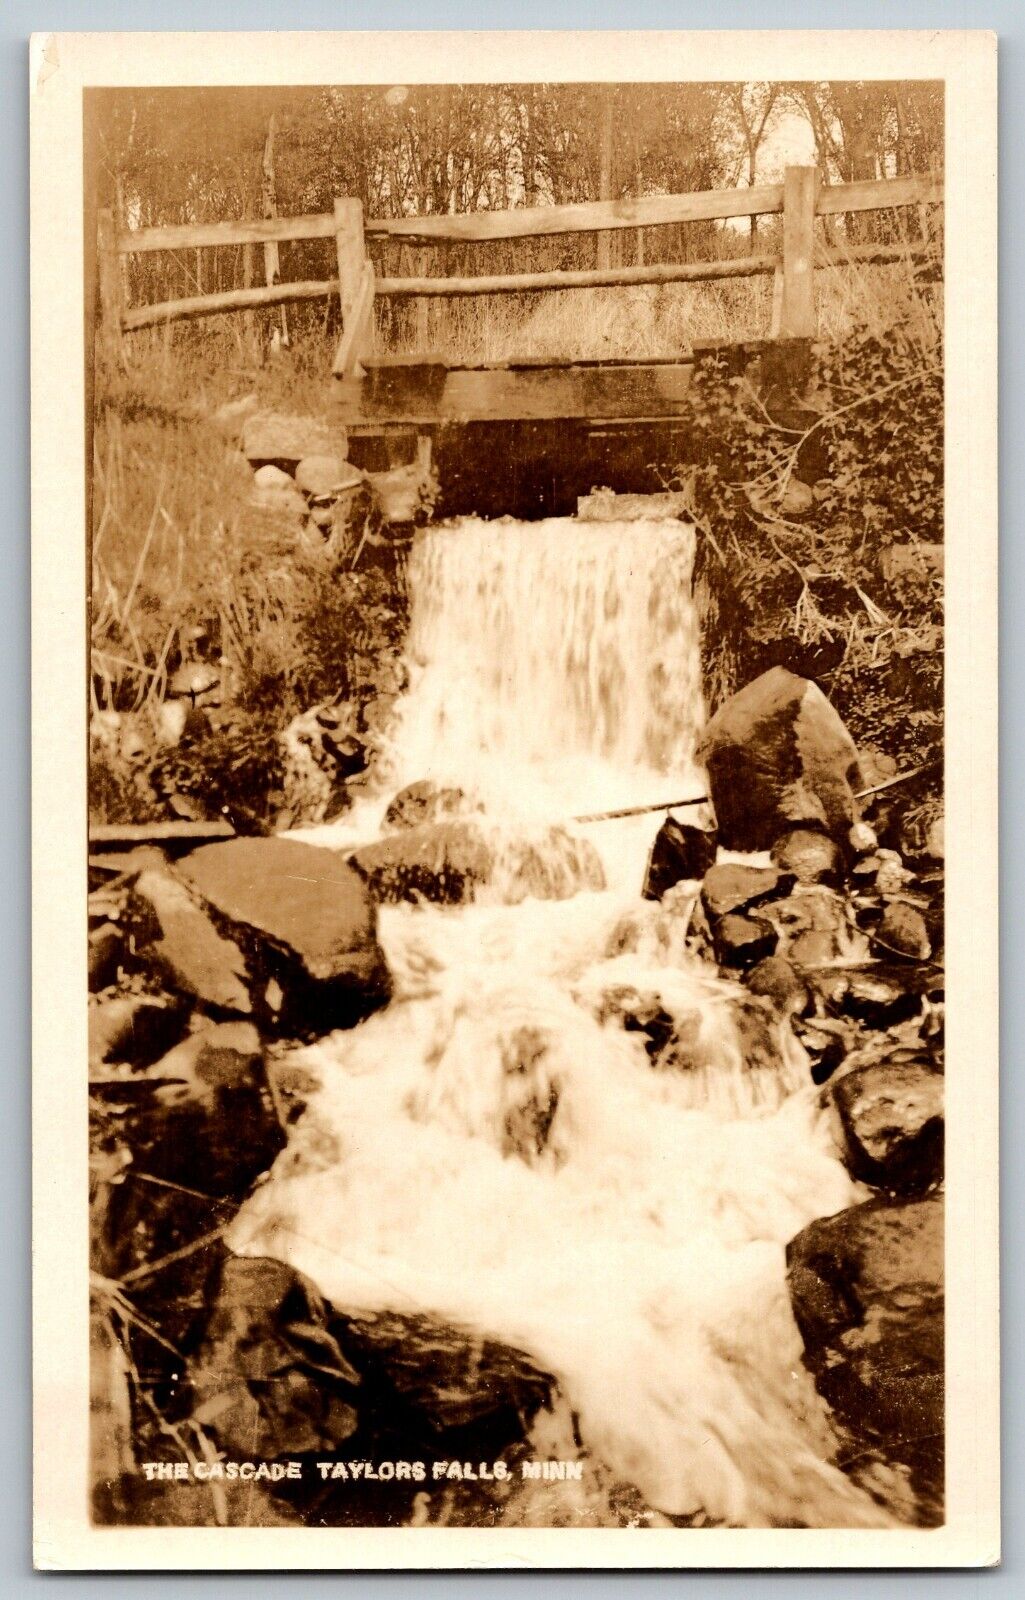 RPPC Vintage Postcard - The Cascade Taylors Falls, Minnesota - Real Photo